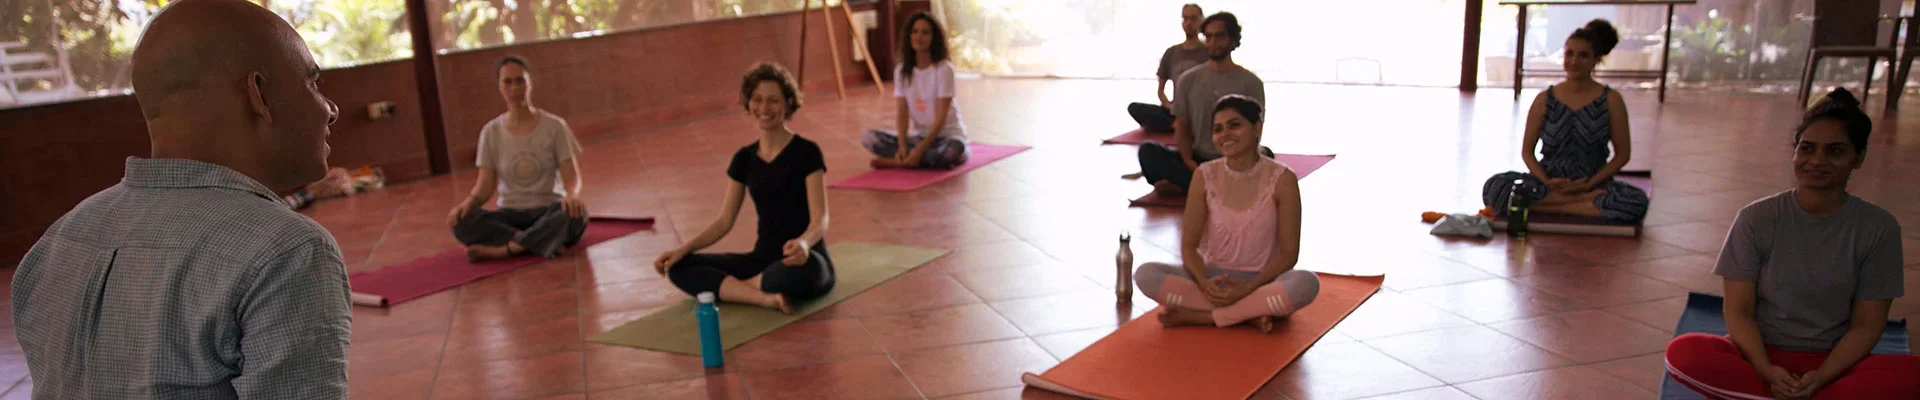 200 Hours Yoga Teacher Training Course by The Yoga Institute, Goa, India17.webp